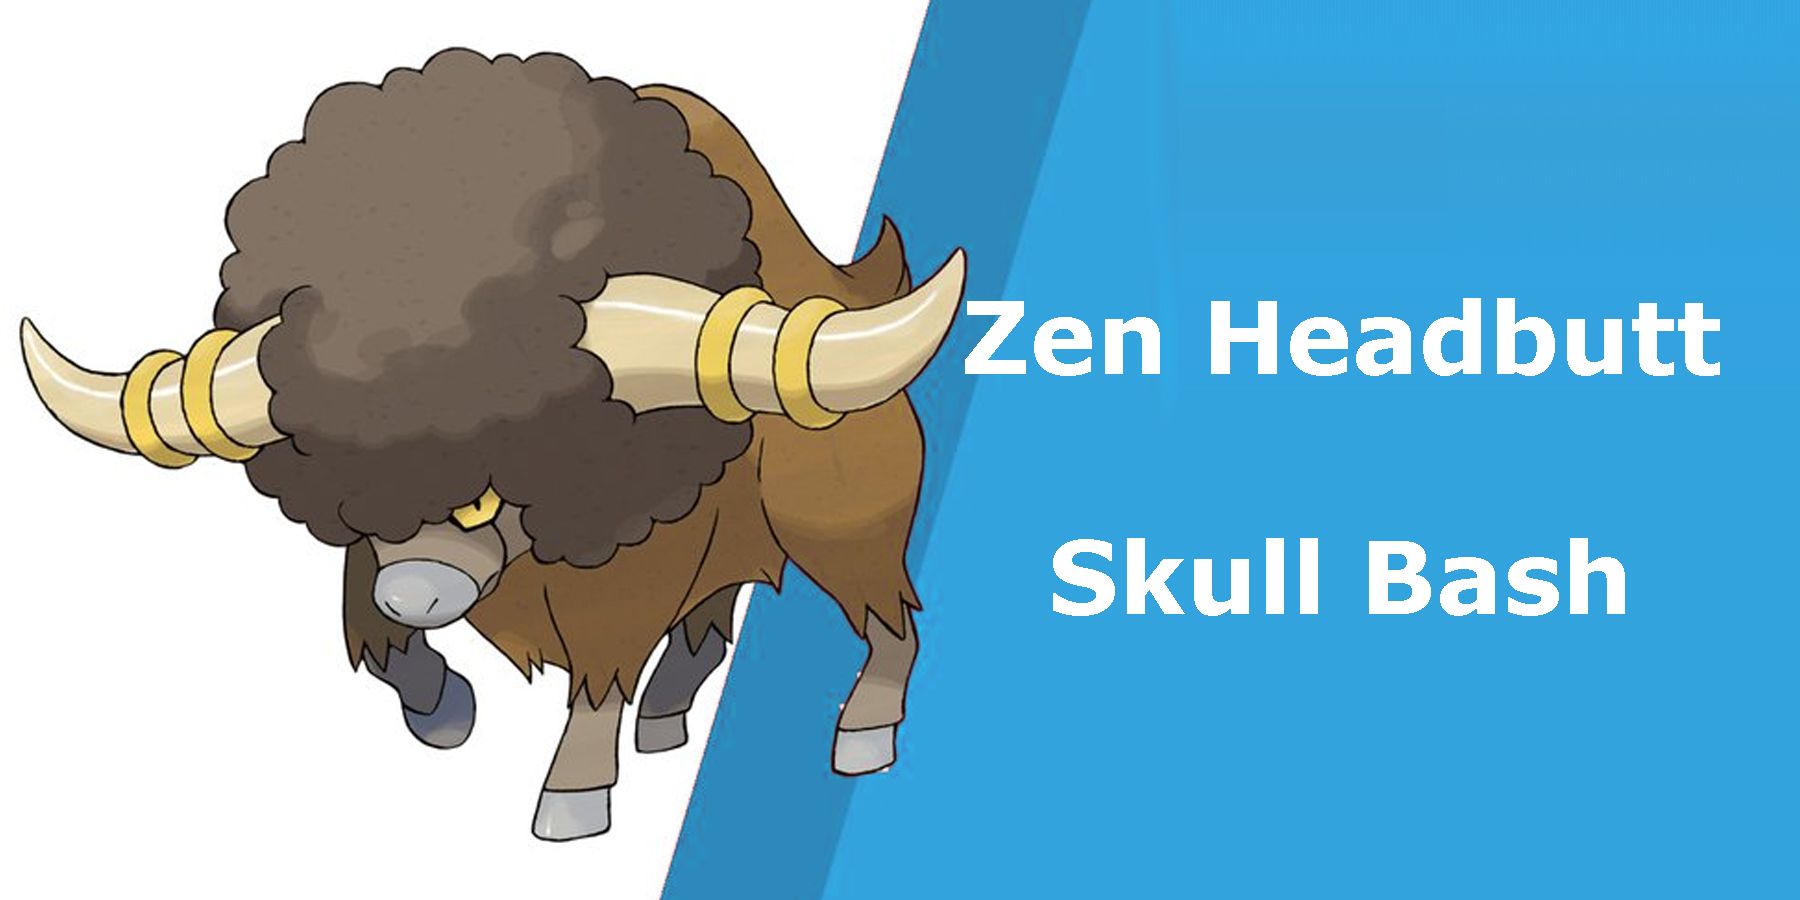 Defensive Moves - Zen Headbutt and Skull Bash